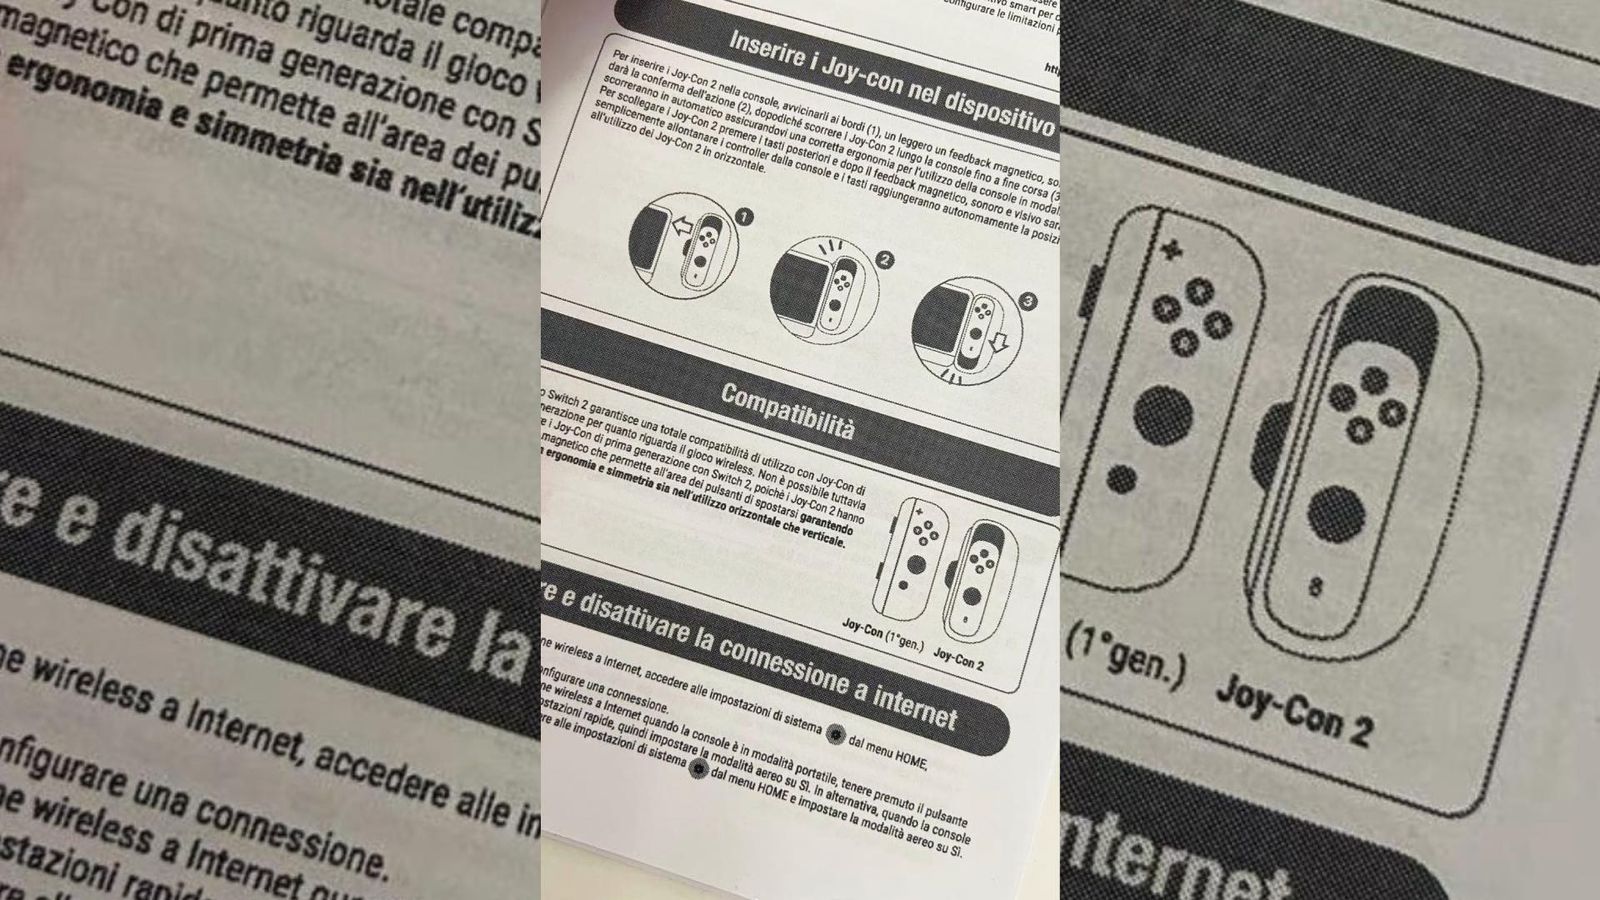 Fake Nintendo switch 2 leak controller documentation